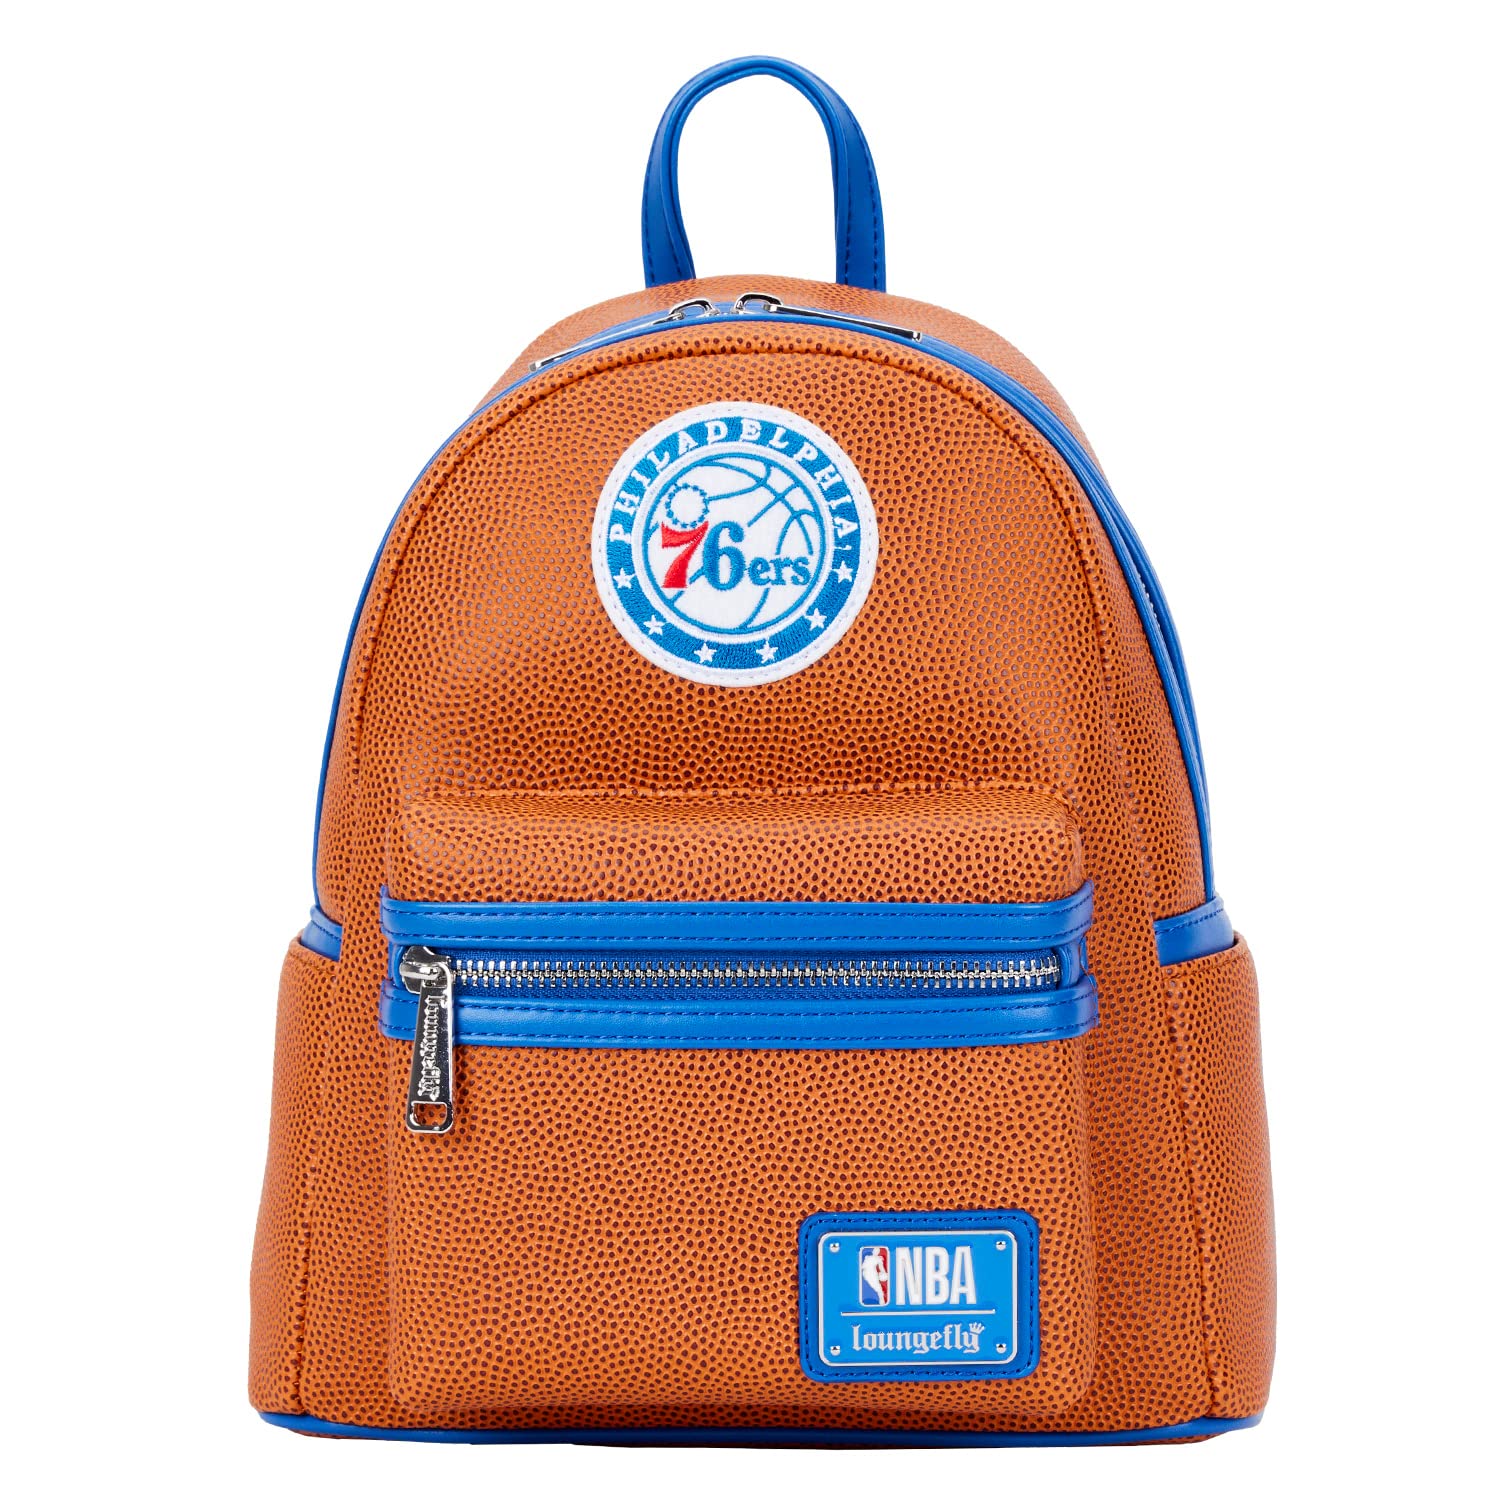 17.5" Loungefly NBA Philadelphia 76ers Basketball Mini Backpack $20.41 + Free Shipping w/ Prime or on $35+